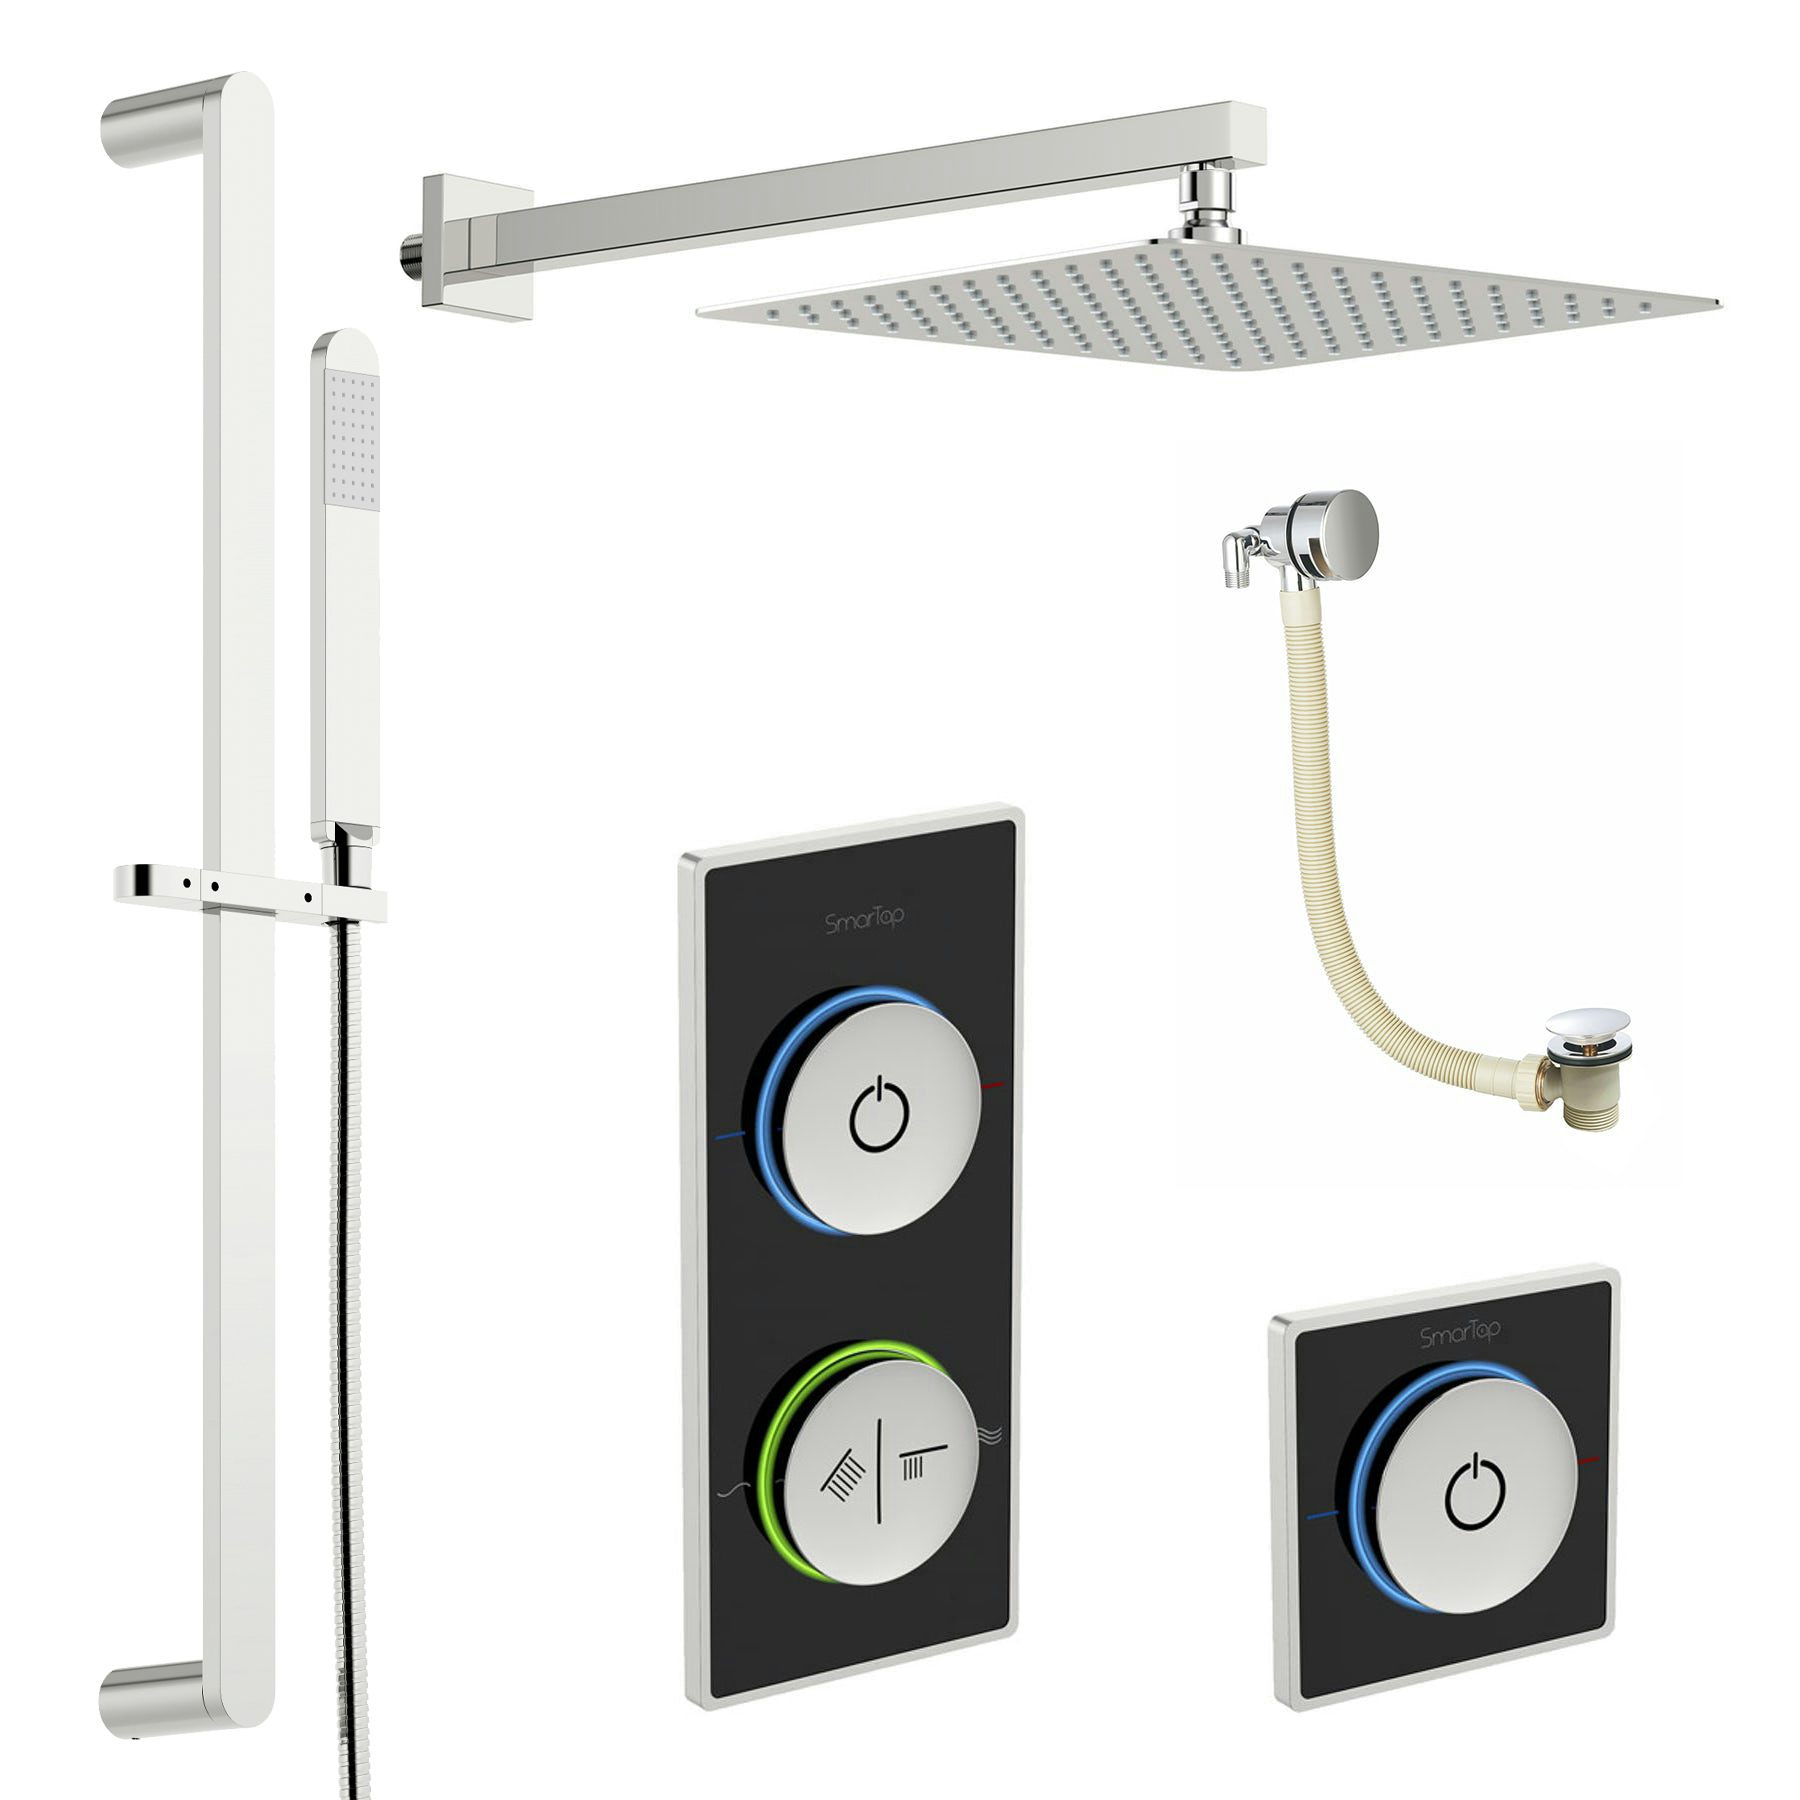 SmarTap black smart shower system with complete square wall shower bath set